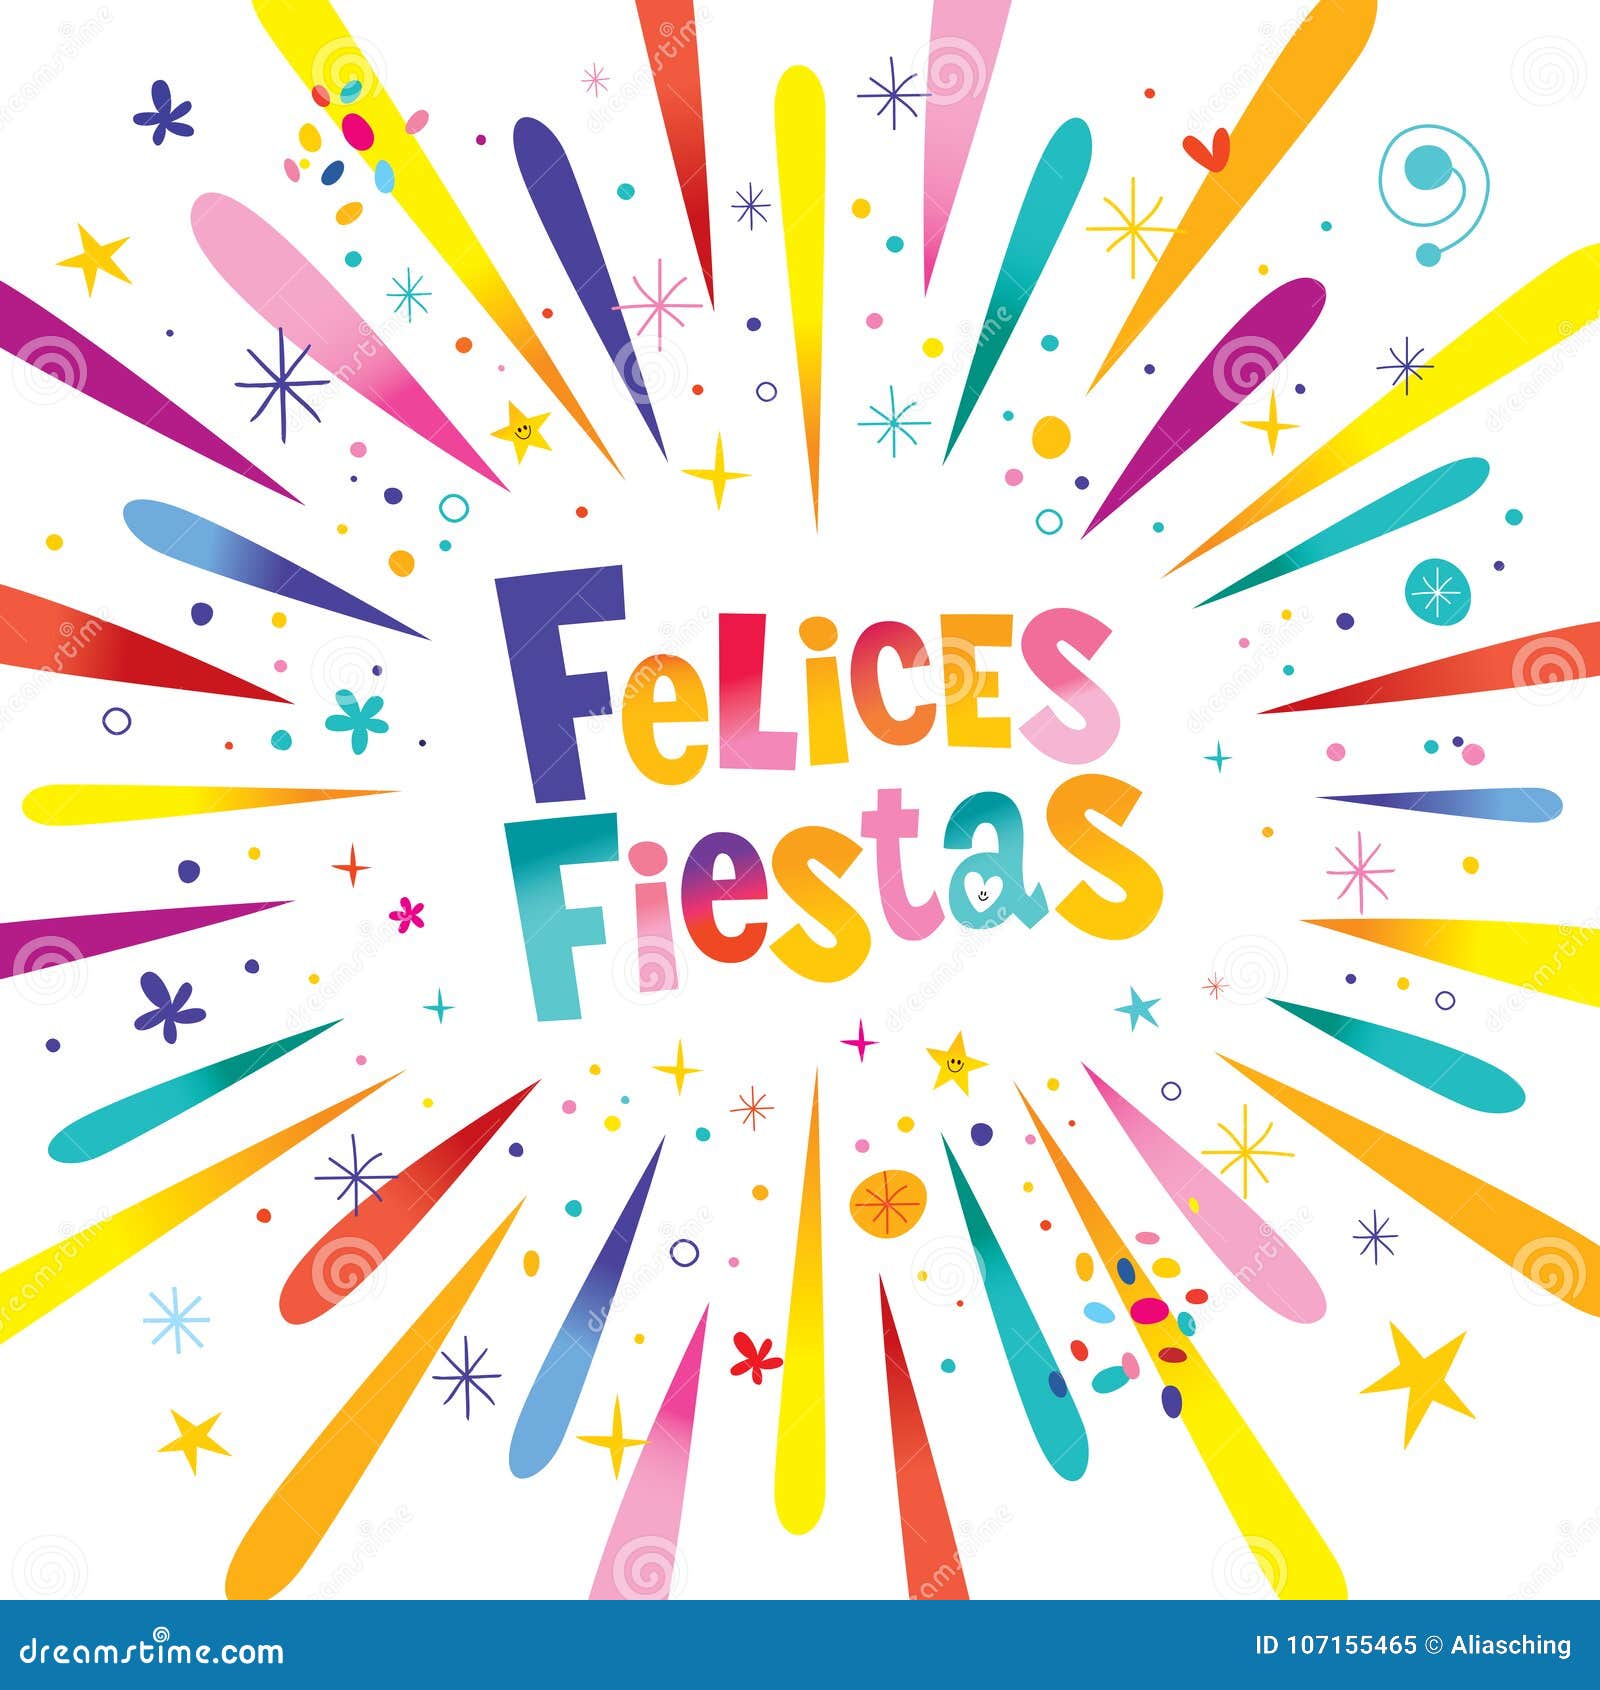 felices fiestas happy holidays in spanish